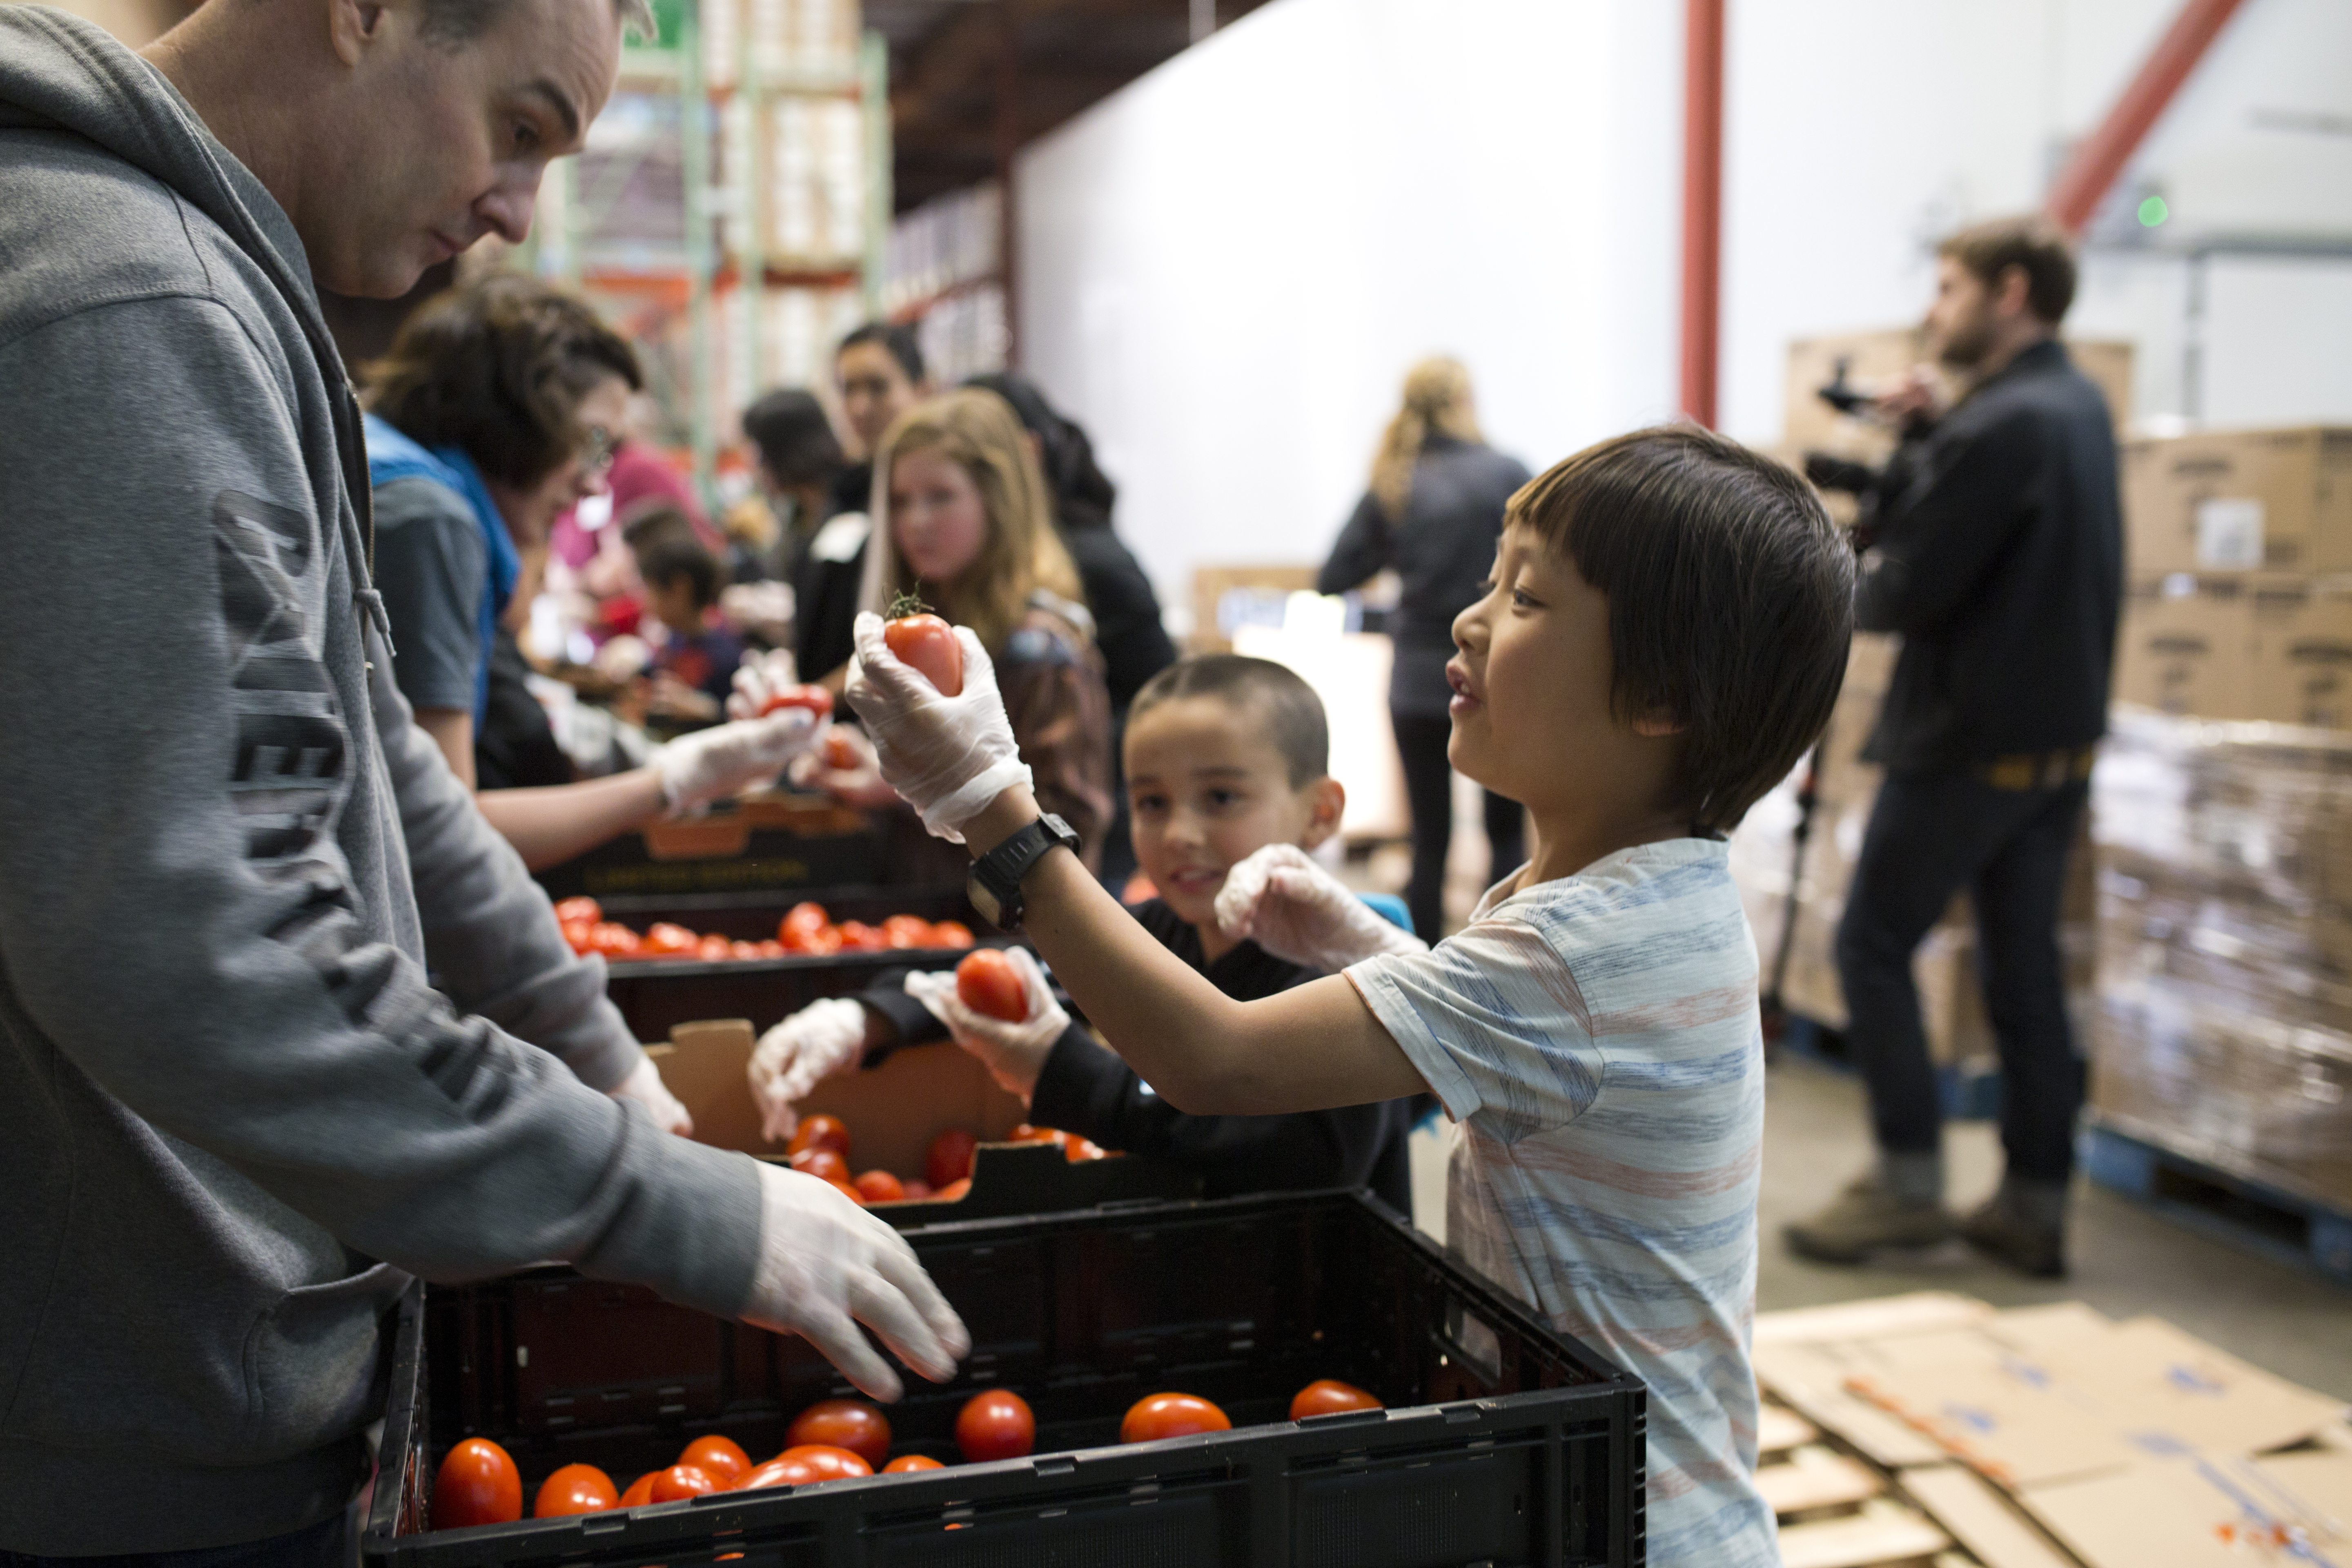 Child volunteer distributing tomatoes